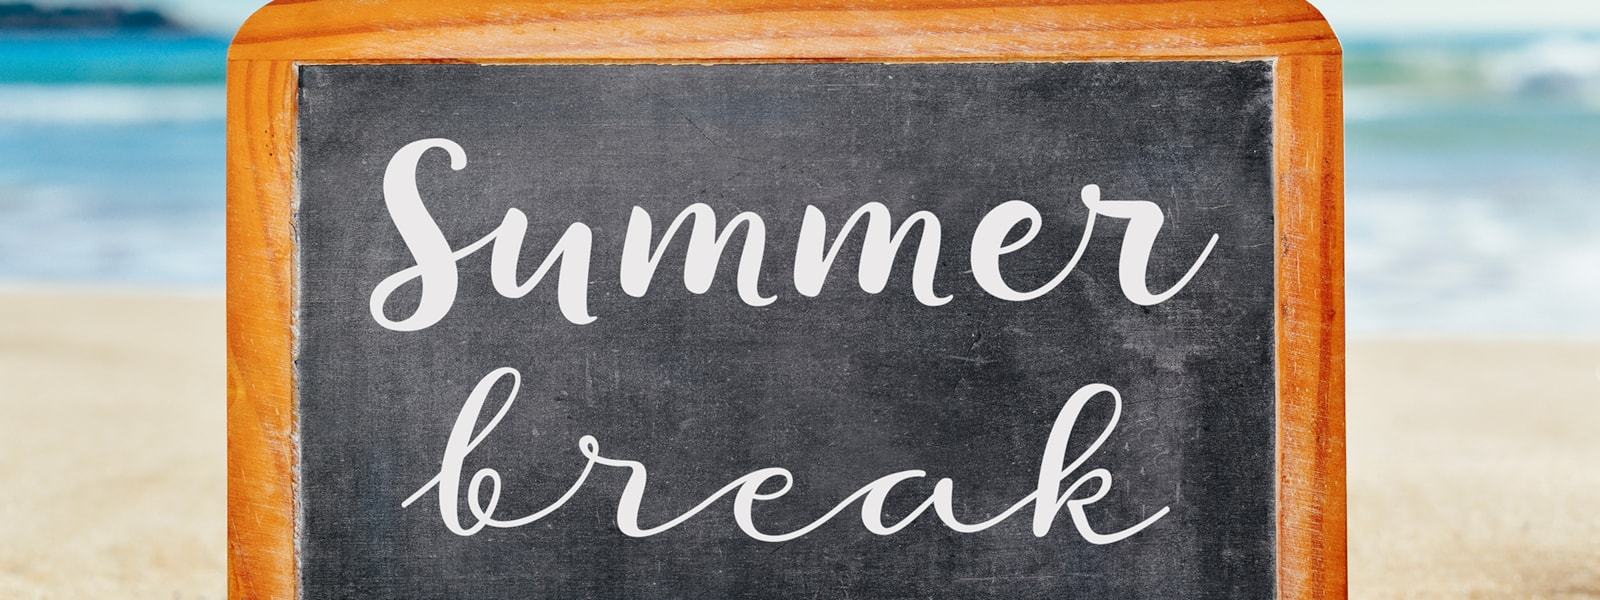 beach scene with a chalkboard that says summer break